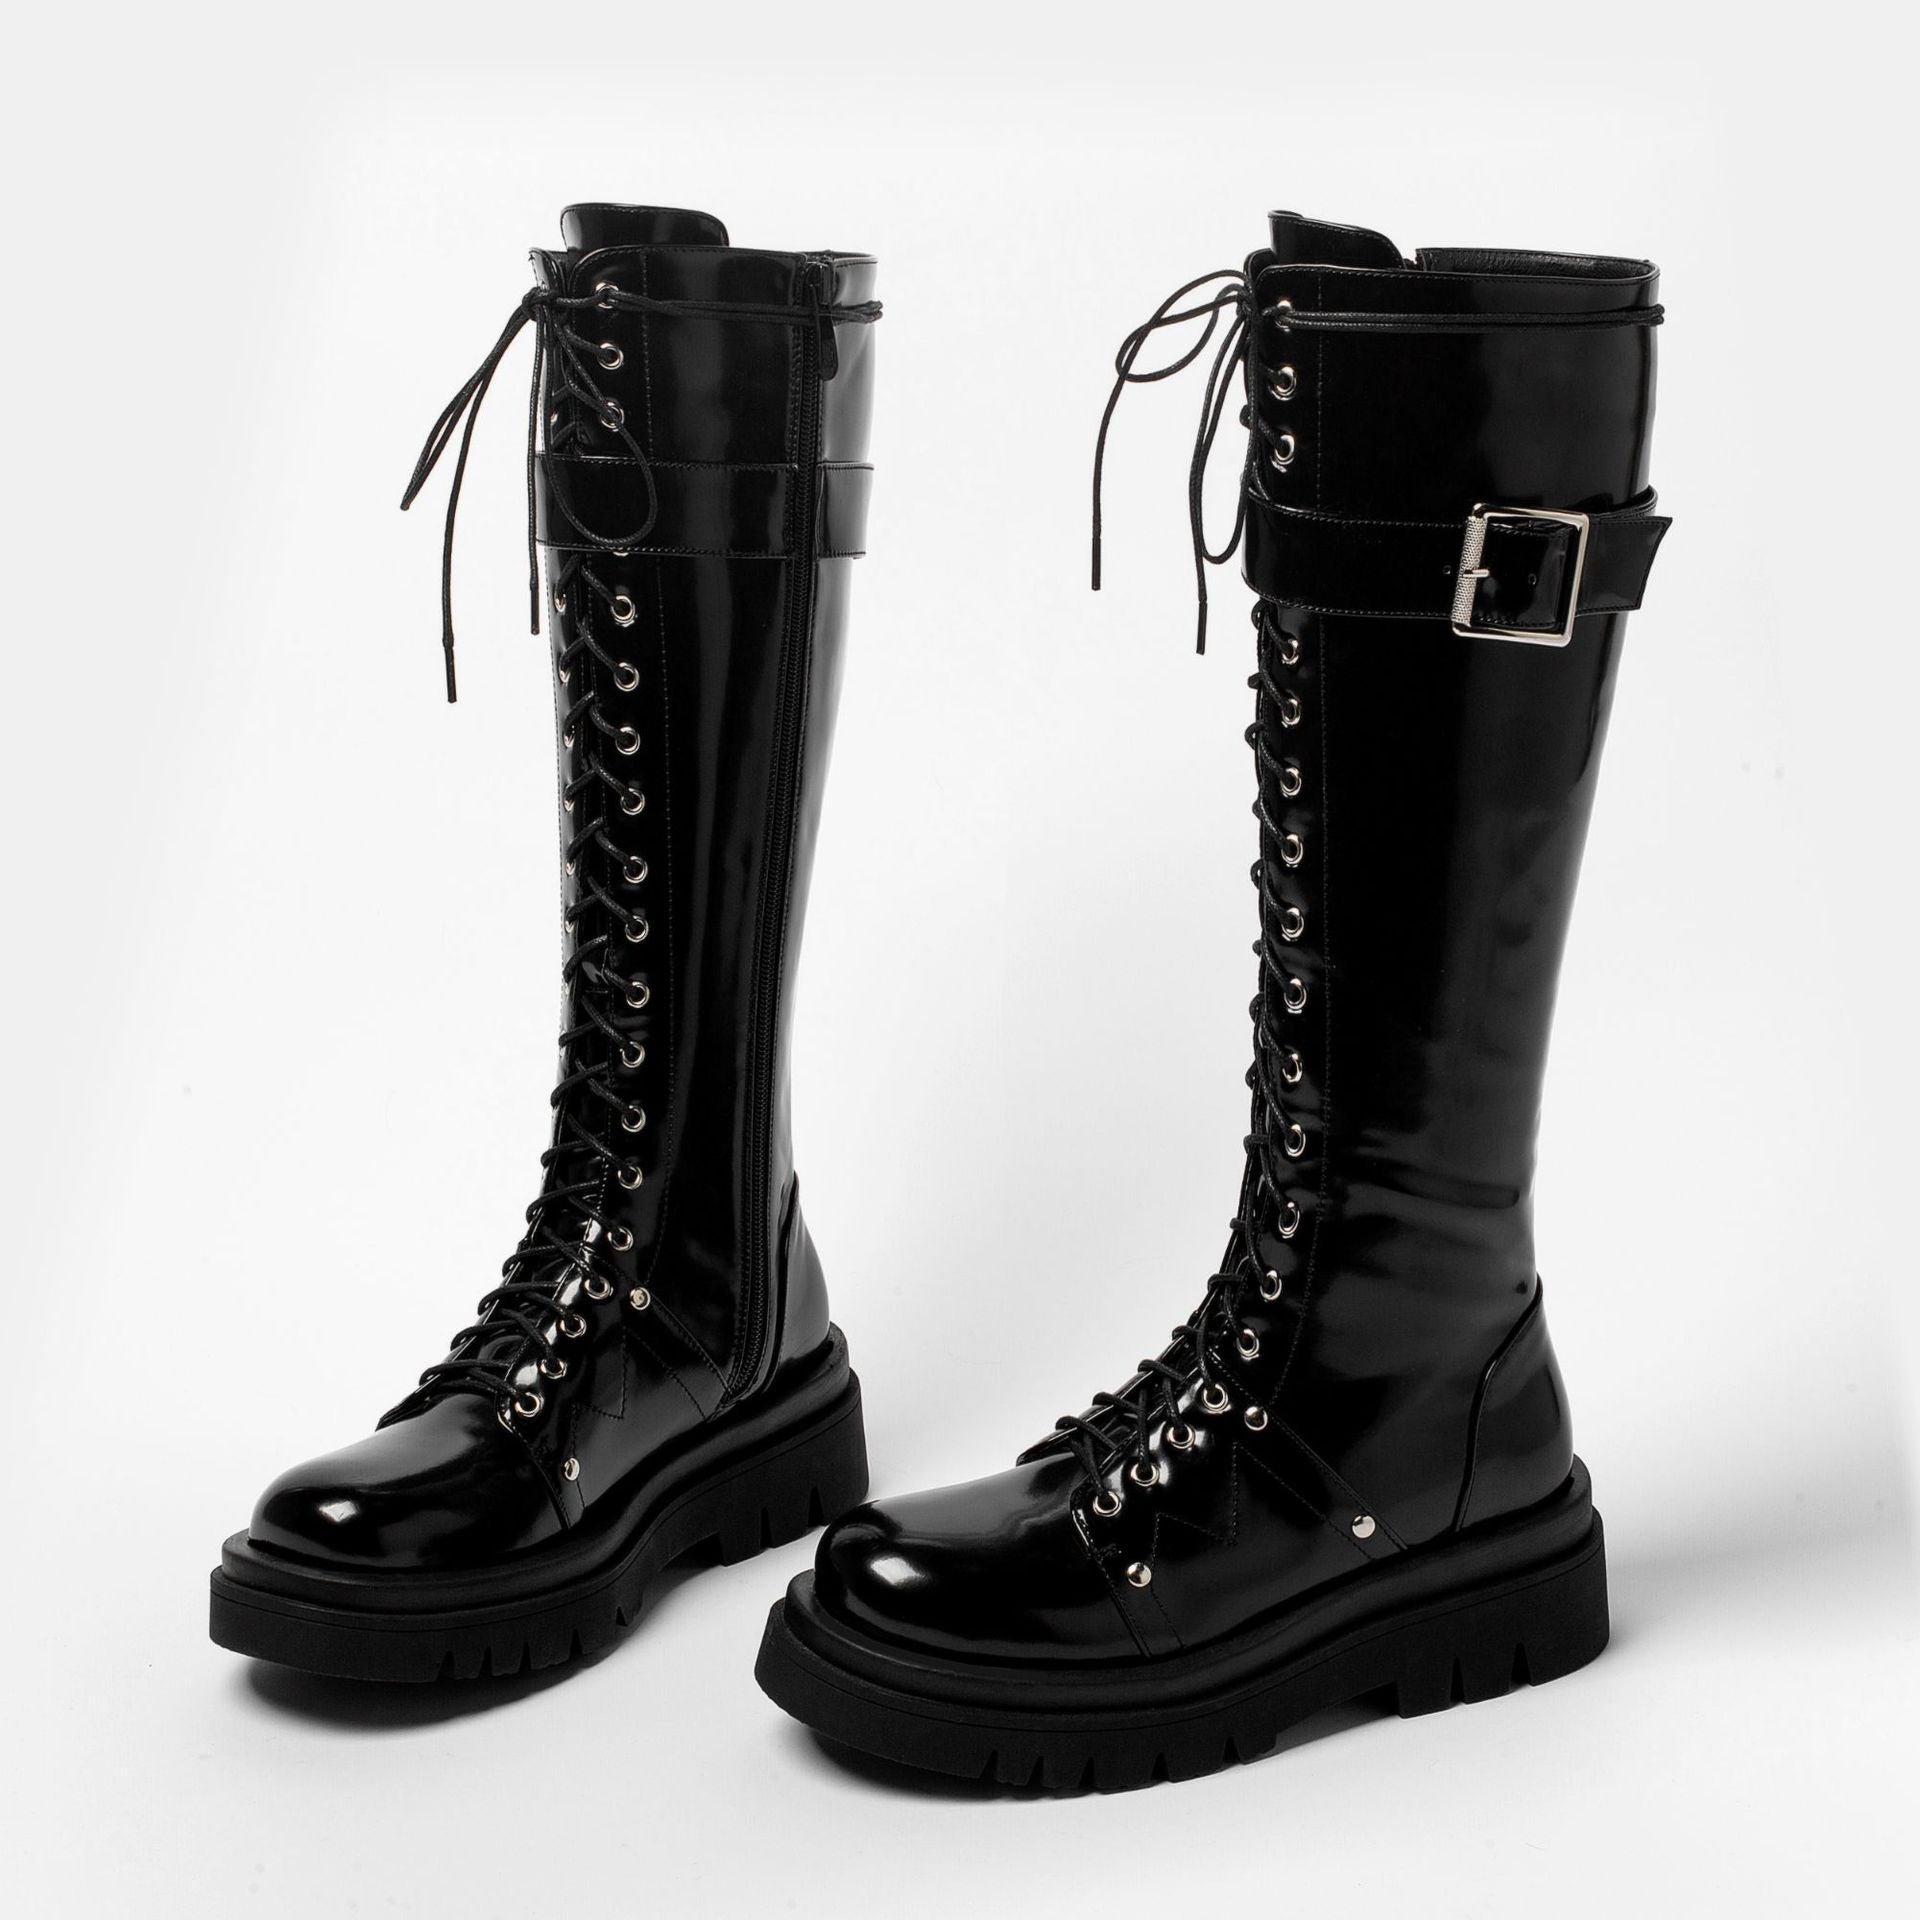 Women's thick platform knee high boots | Platform combat boots with ...